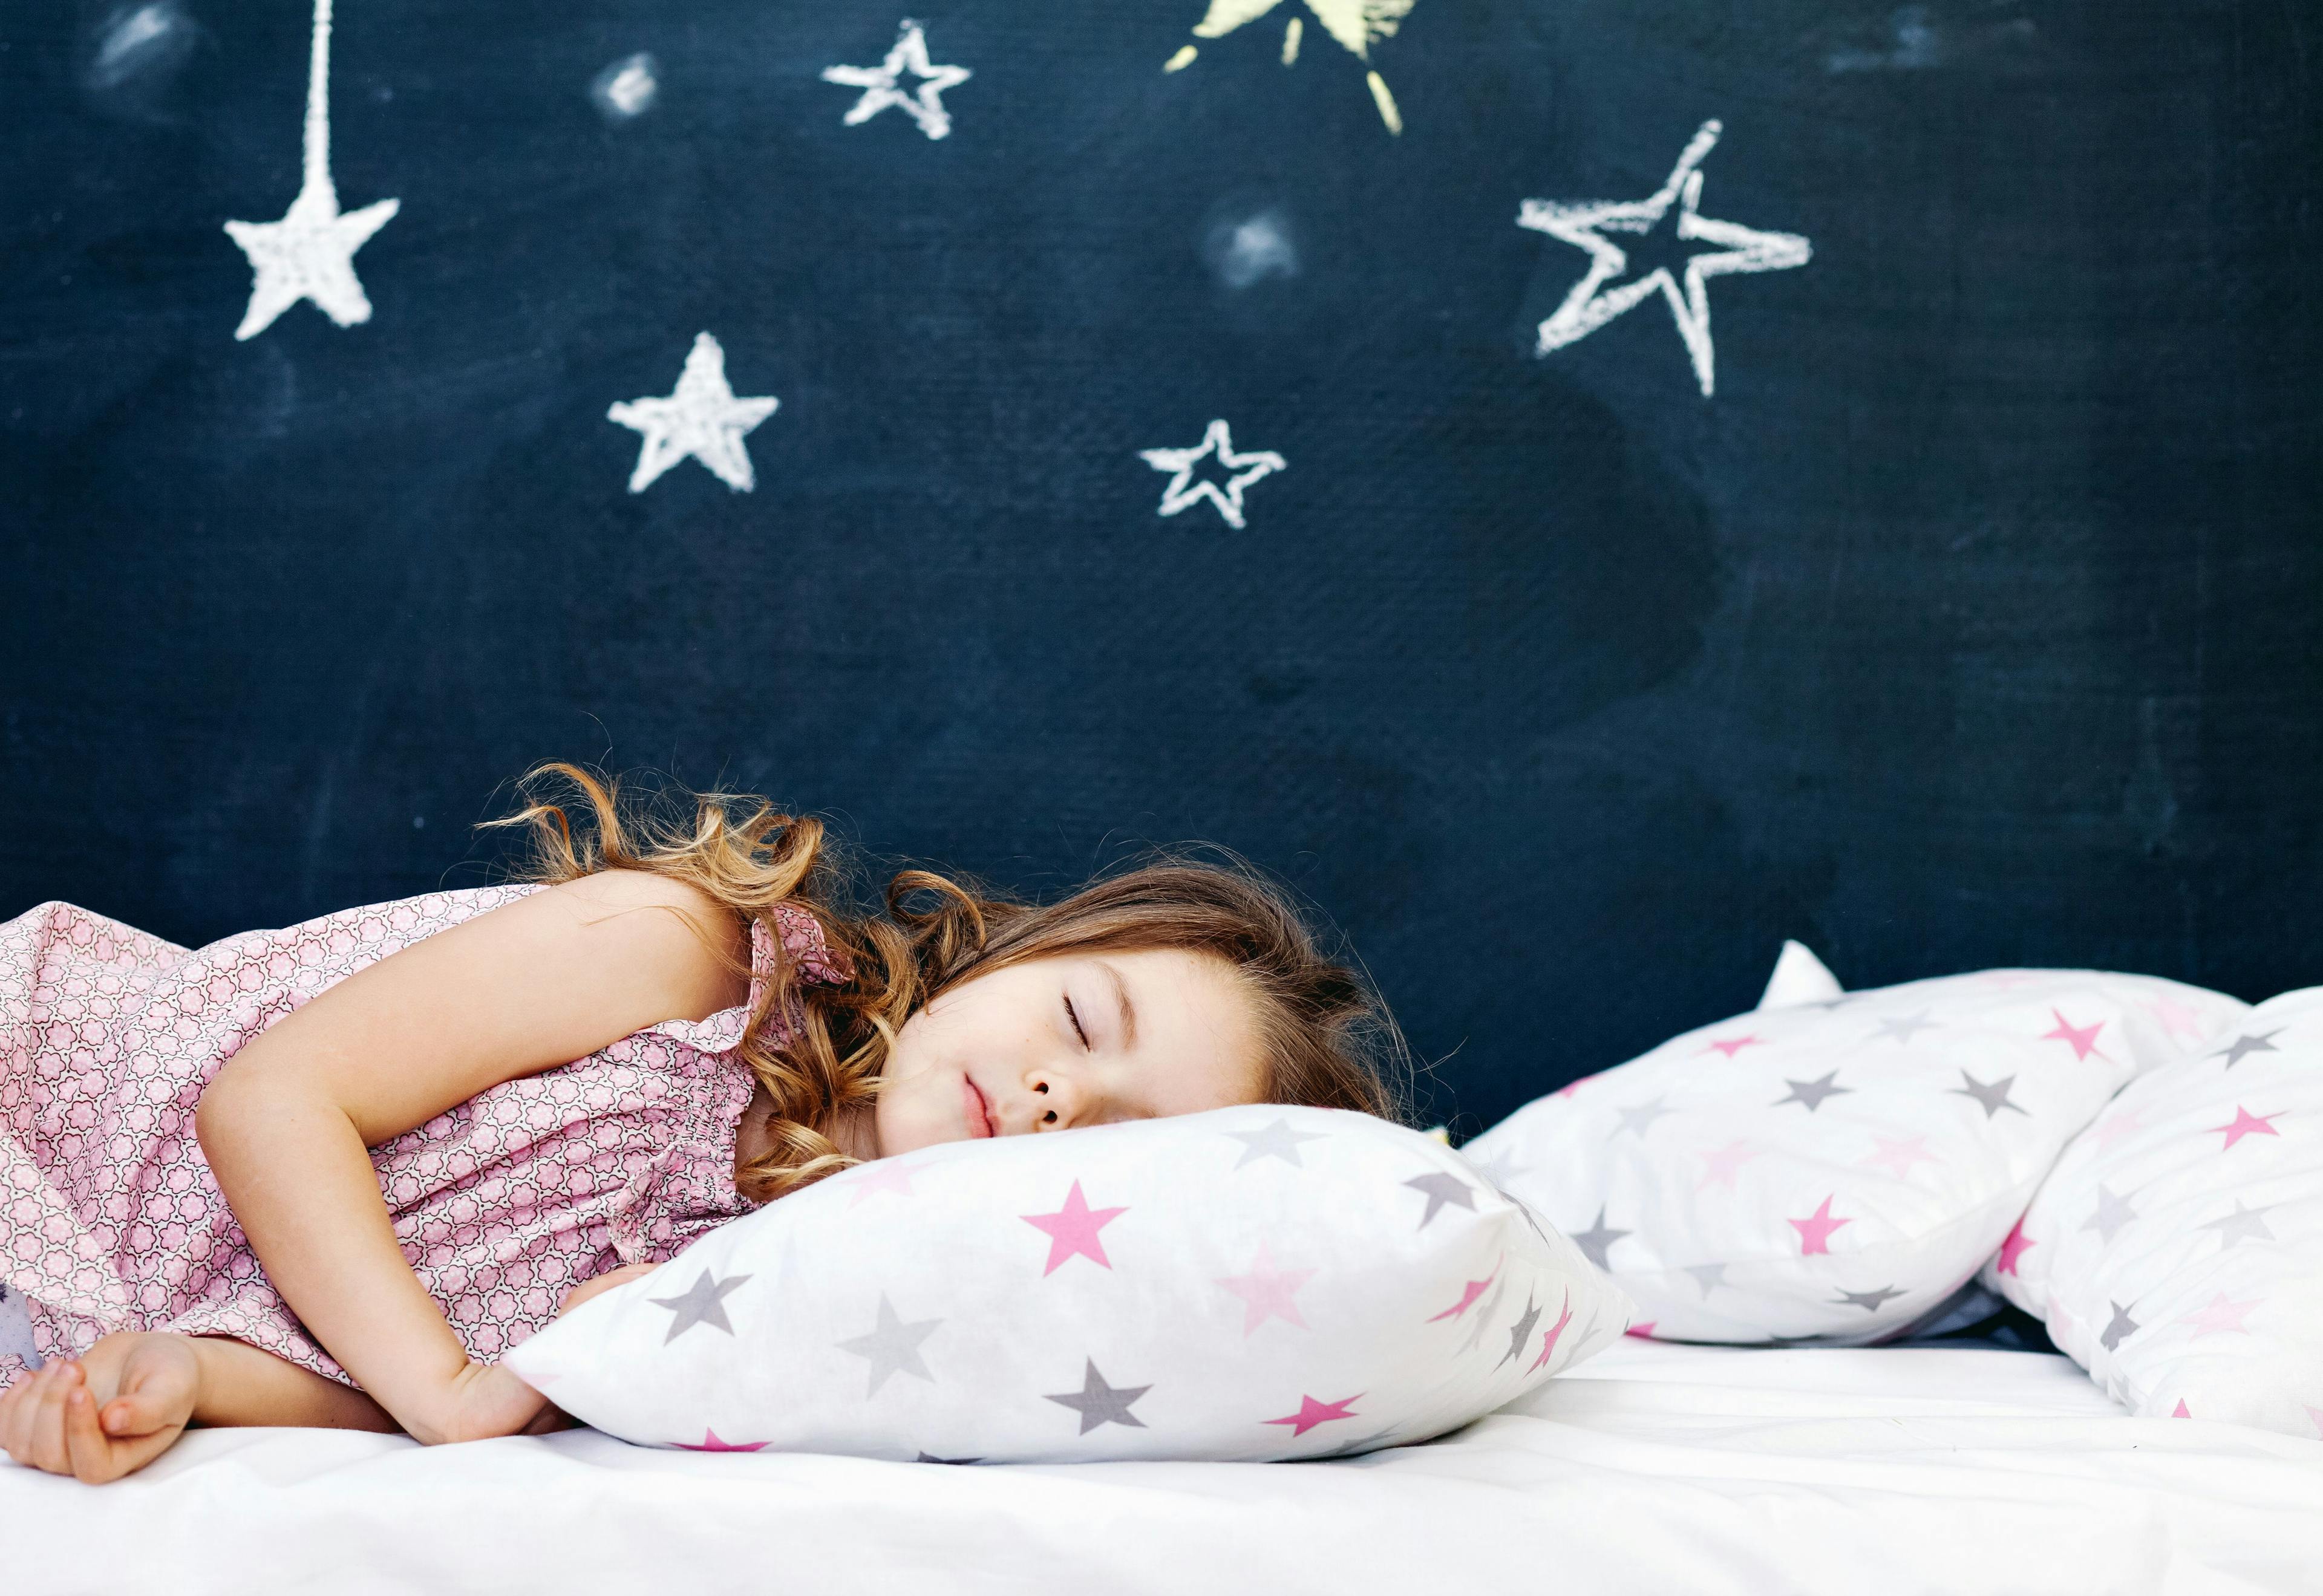 Can intranasal corticosteroids improve obstructive sleep apnea syndrome in children?